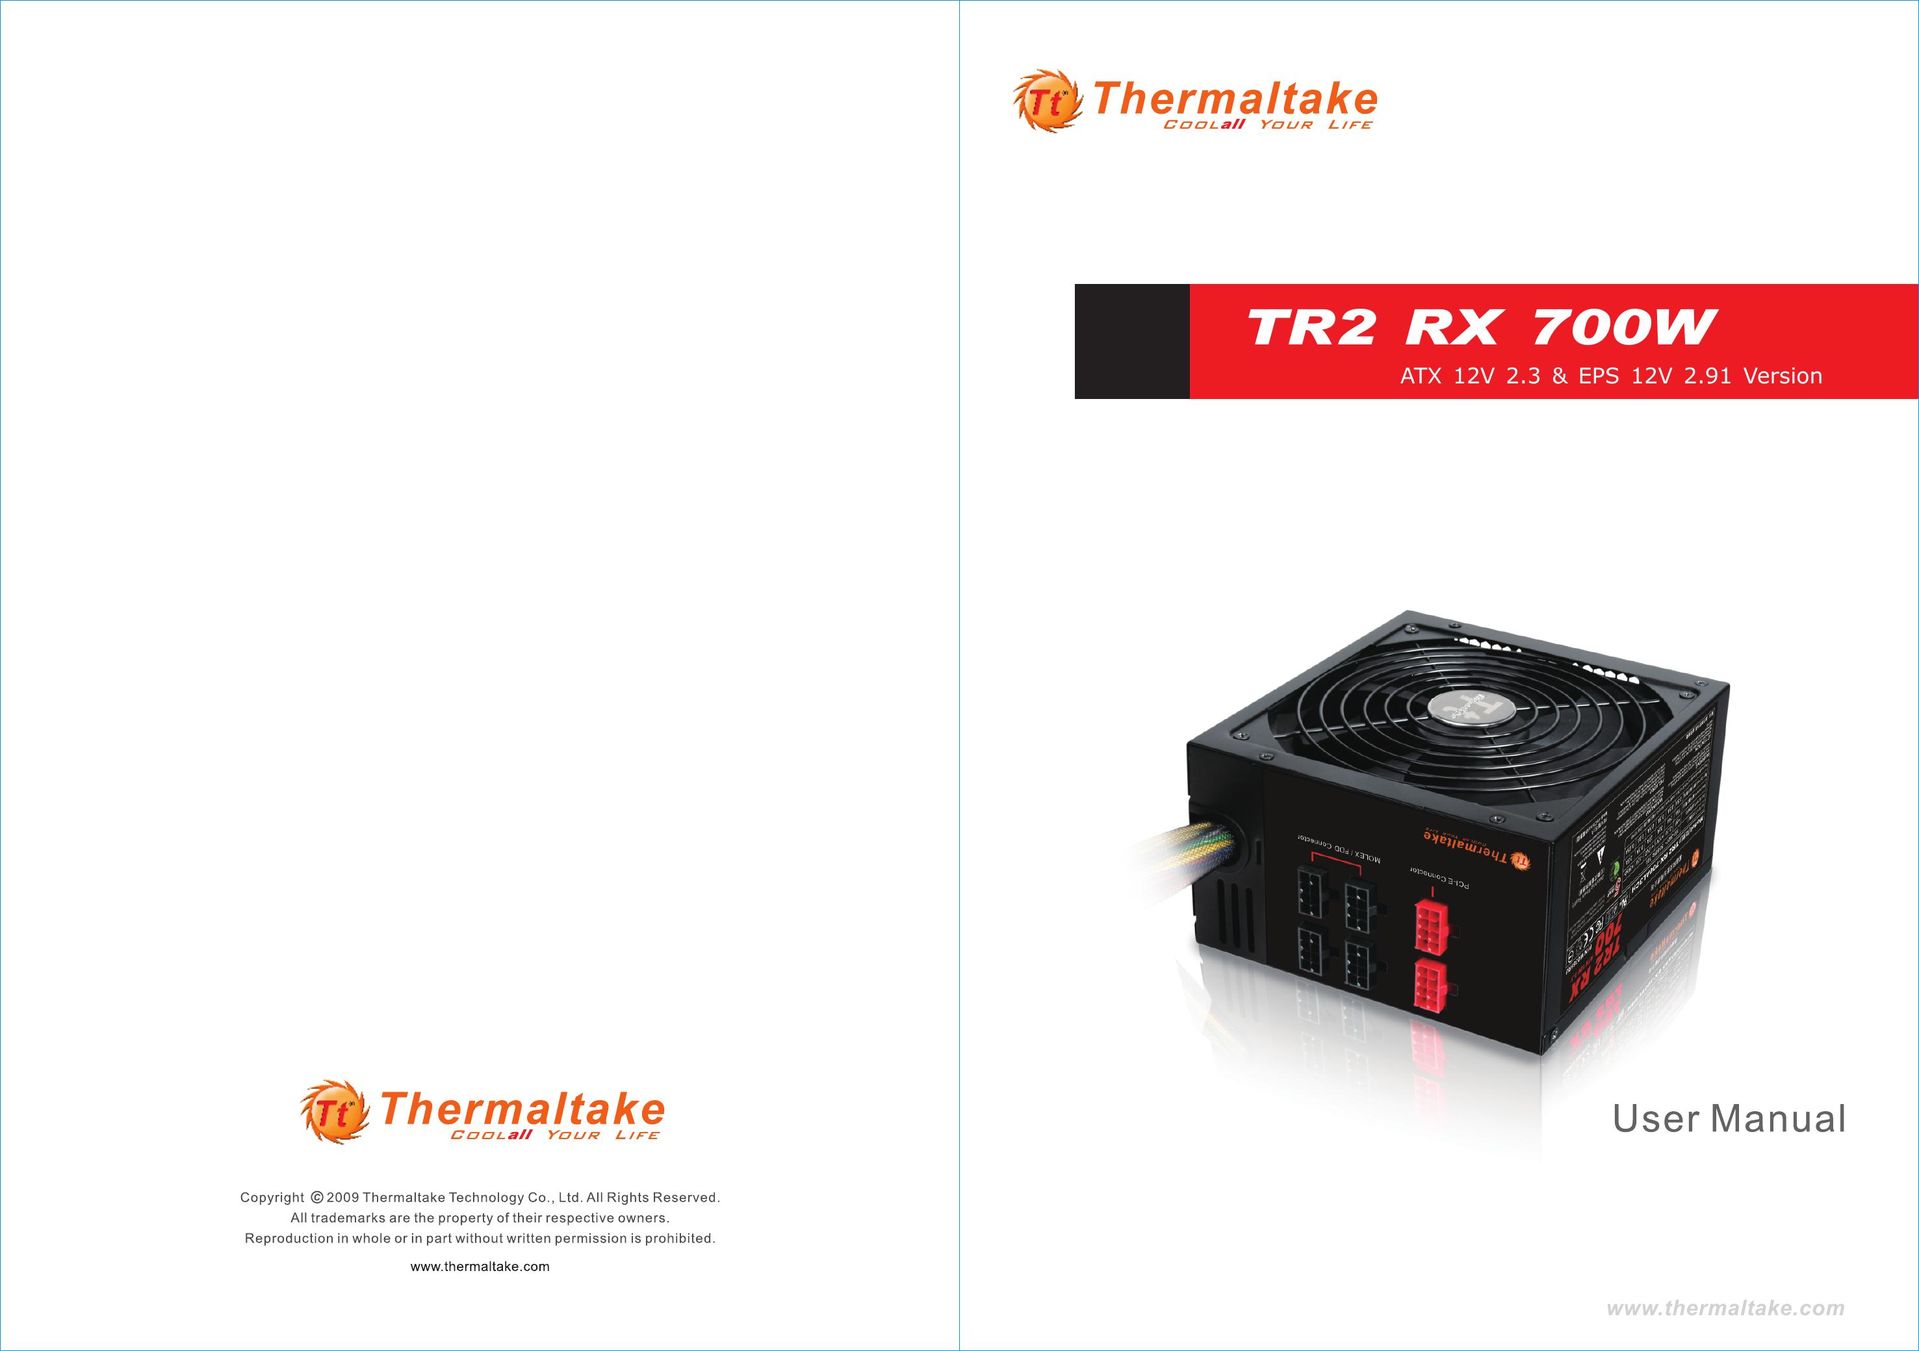 Thermaltake TR2 RX 700w Power Supply User Manual